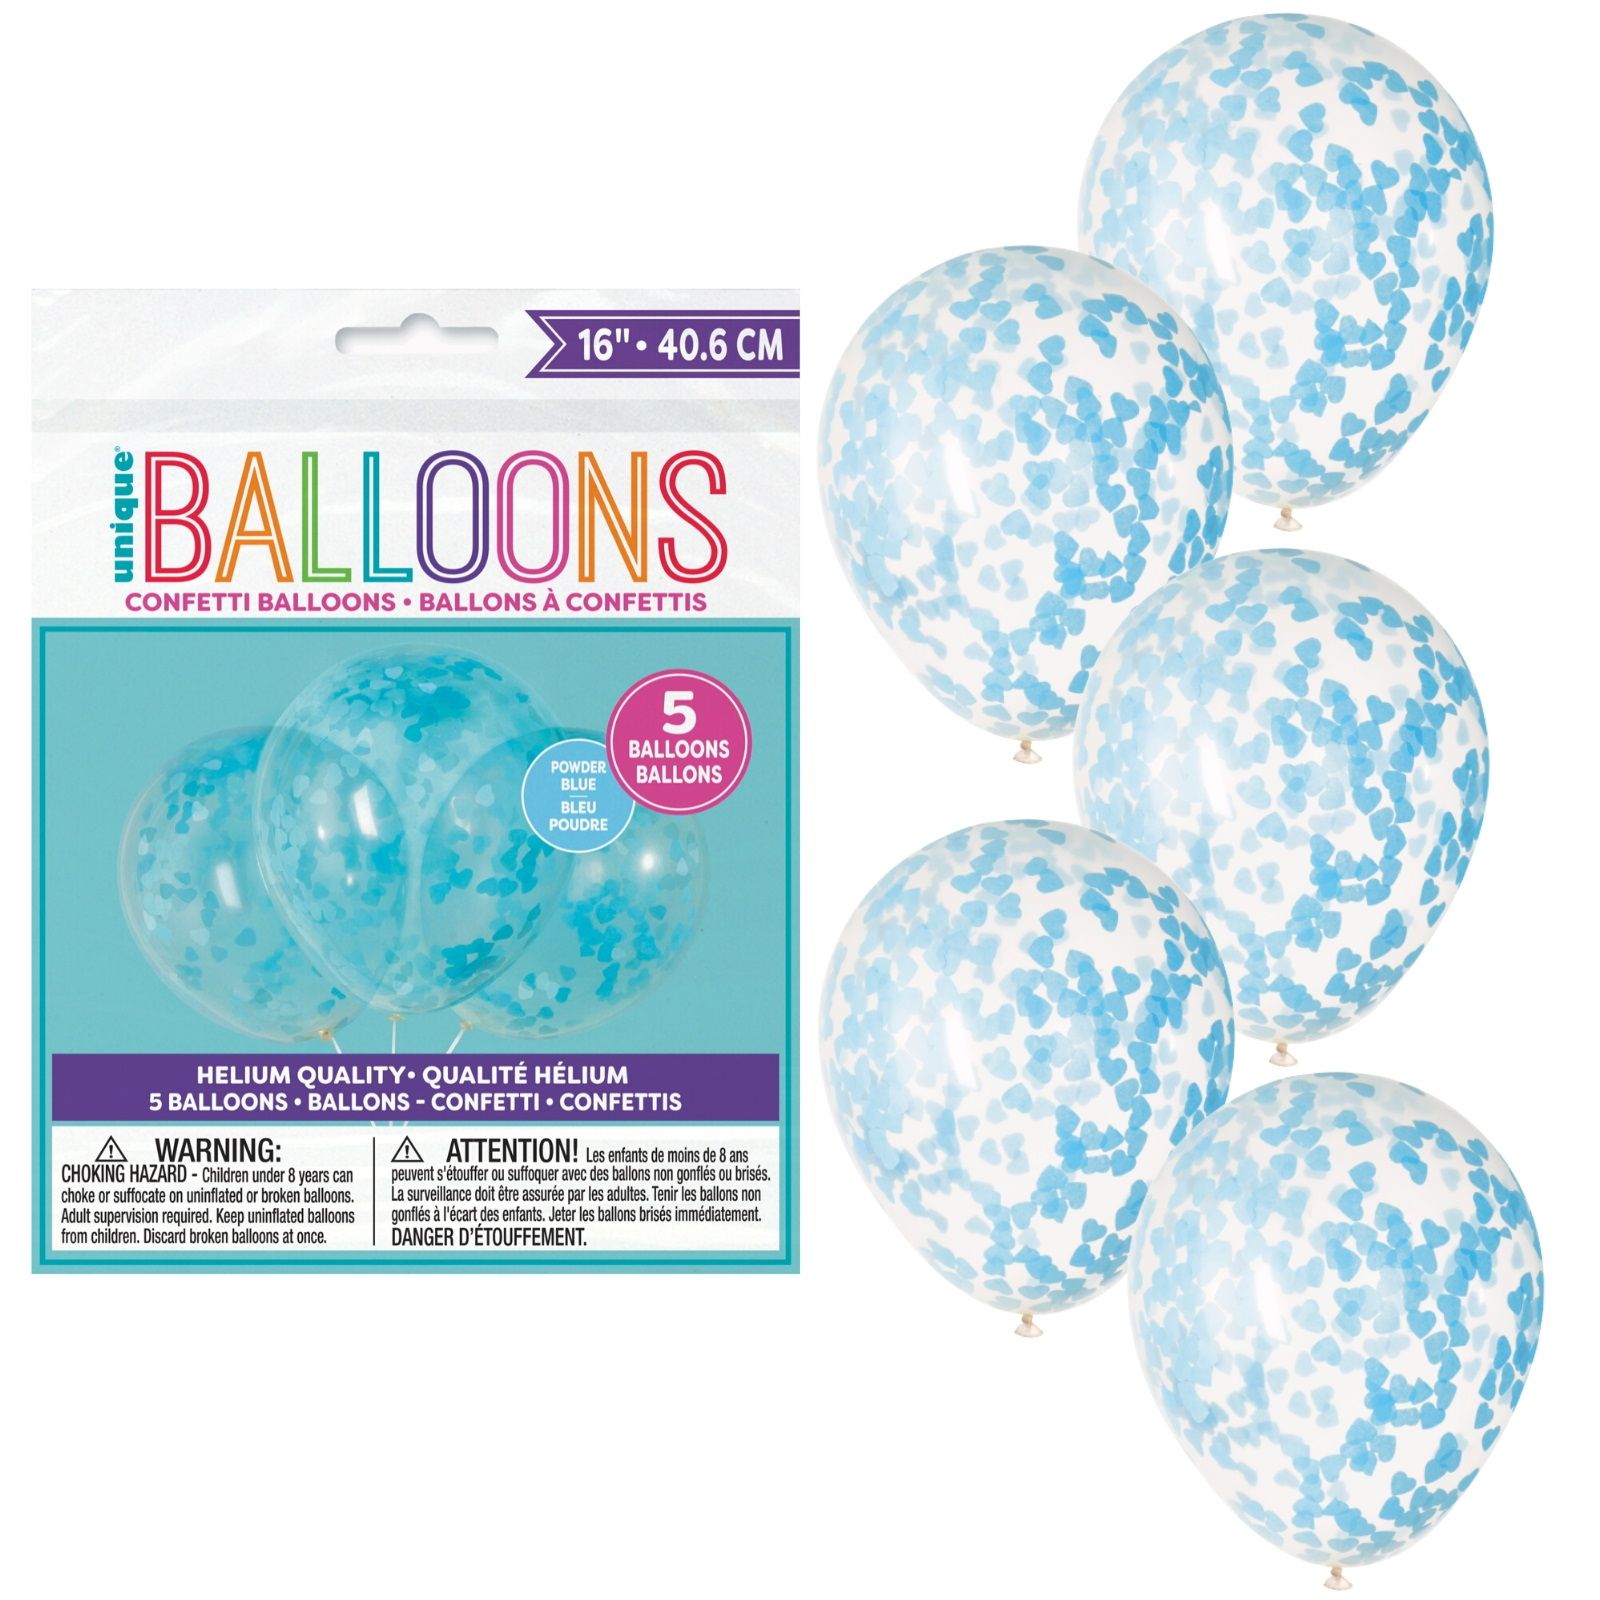 Large Heart Confetti Balloons (5) - Powder Blue (16"!) Unique Party Supplies